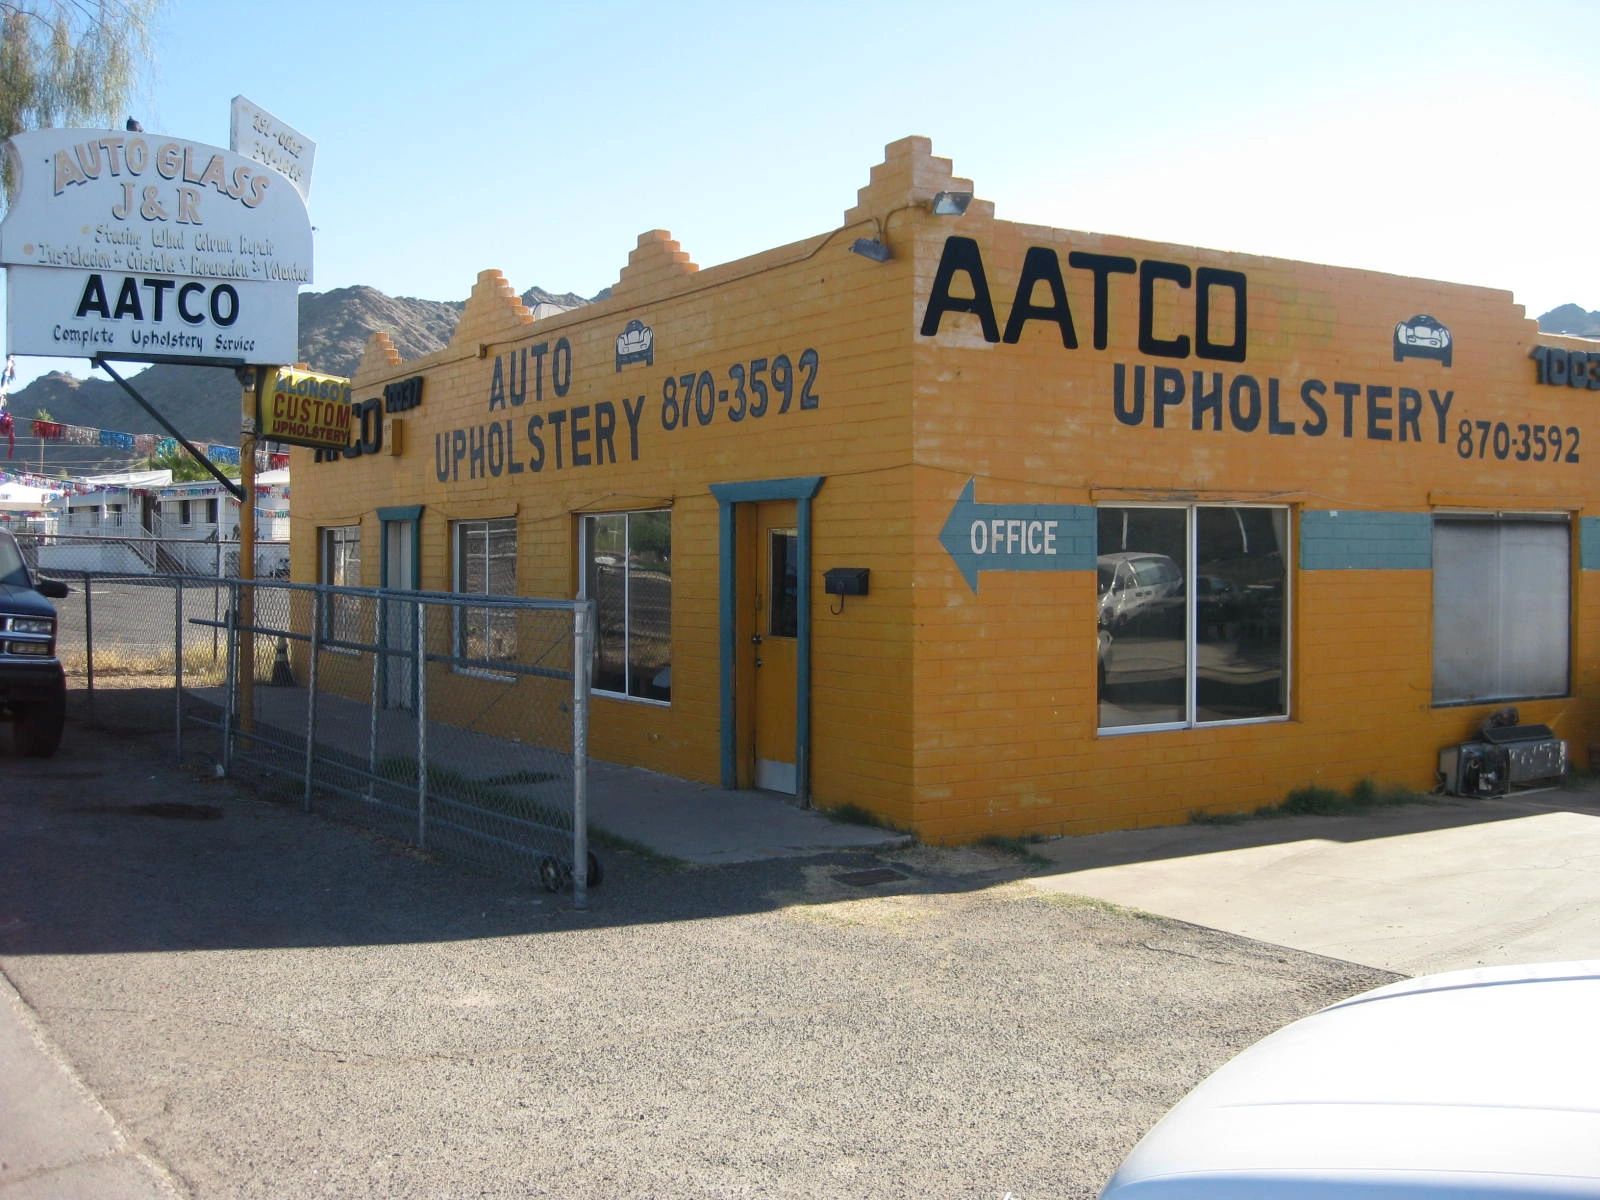 AATCO - Arizona Auto Trim Company